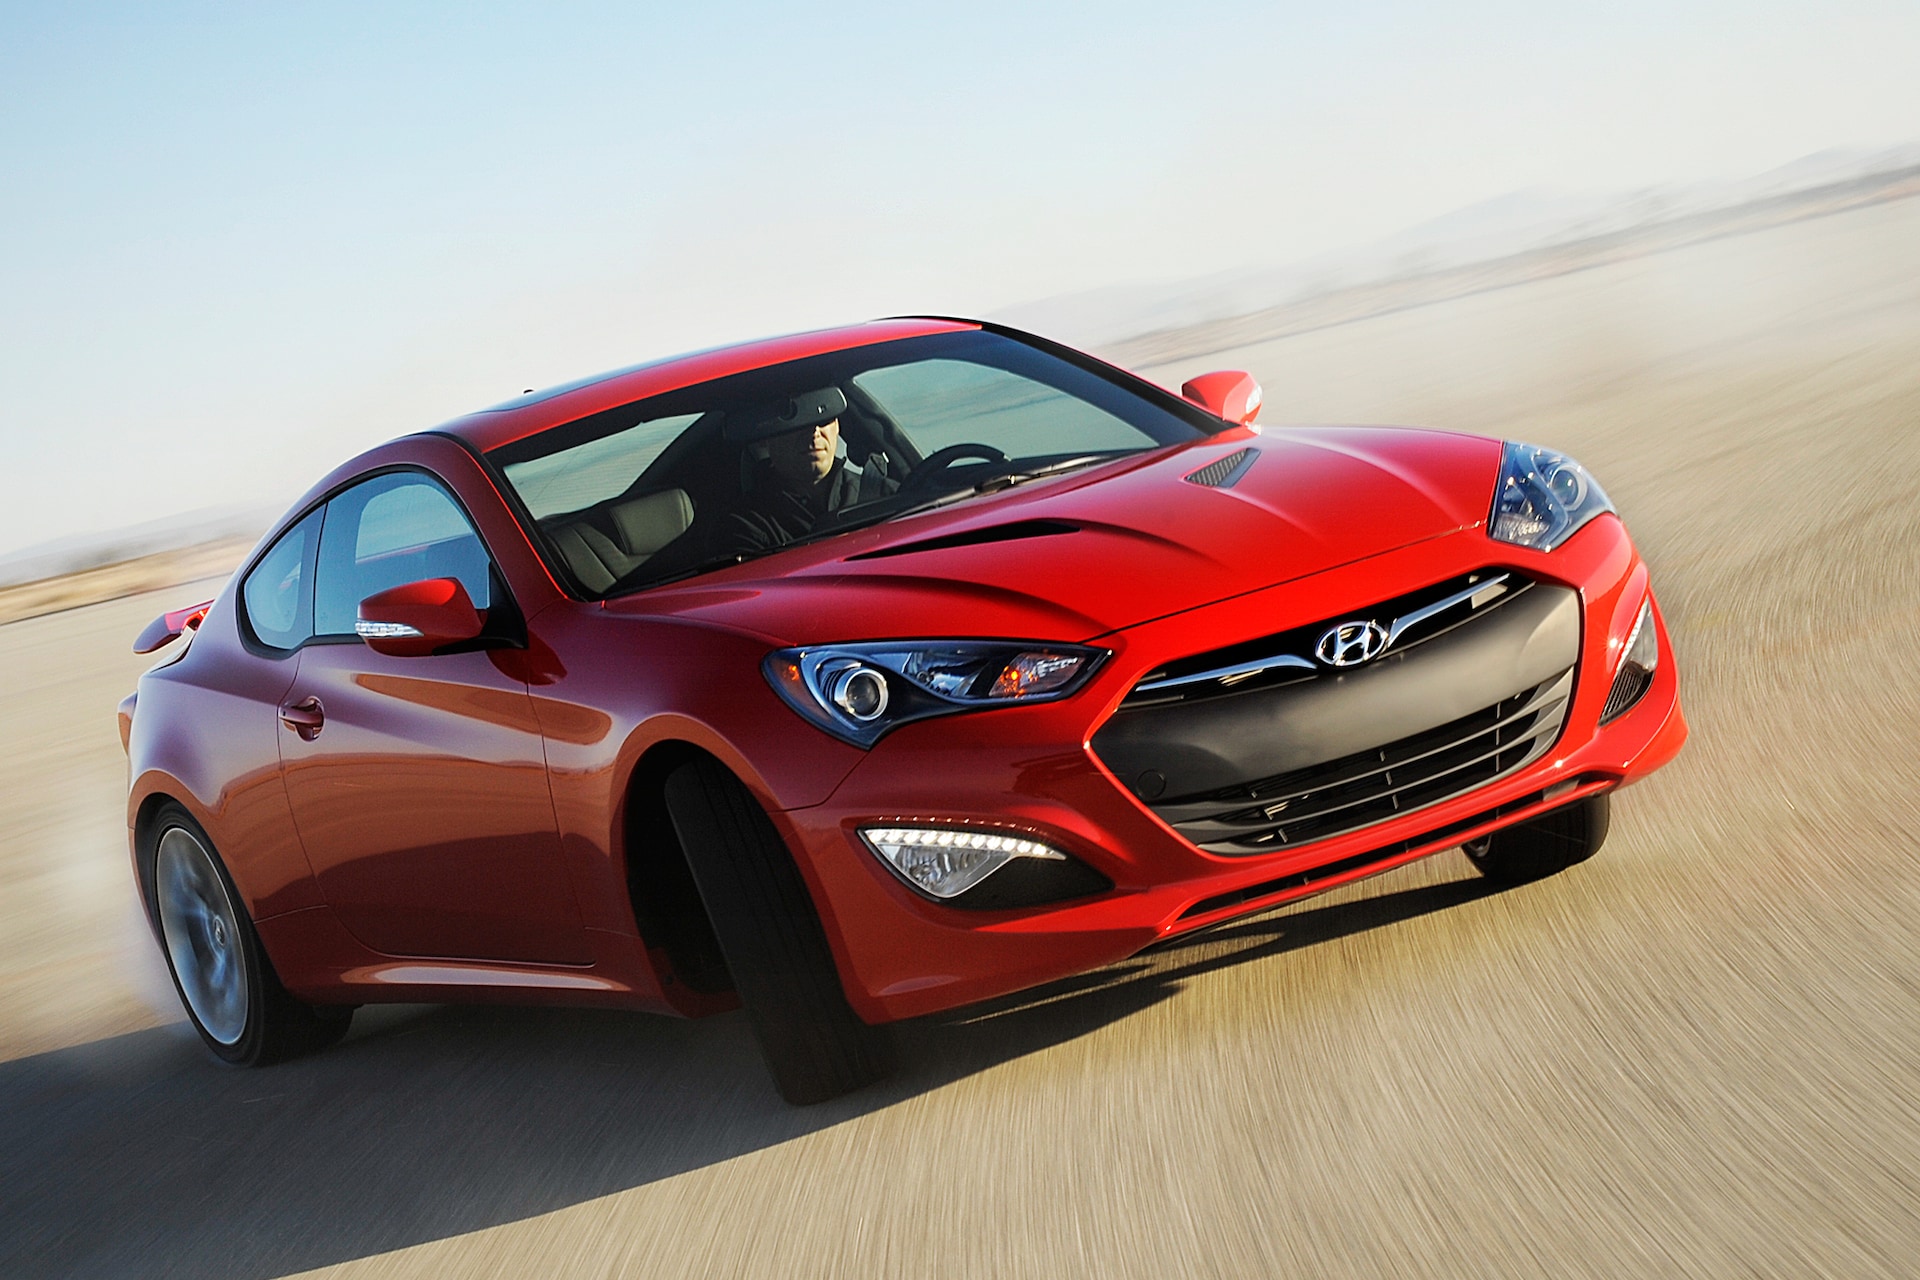 2014 Hyundai Genesis Coupe Gets Minor Update, Slight Price Bump